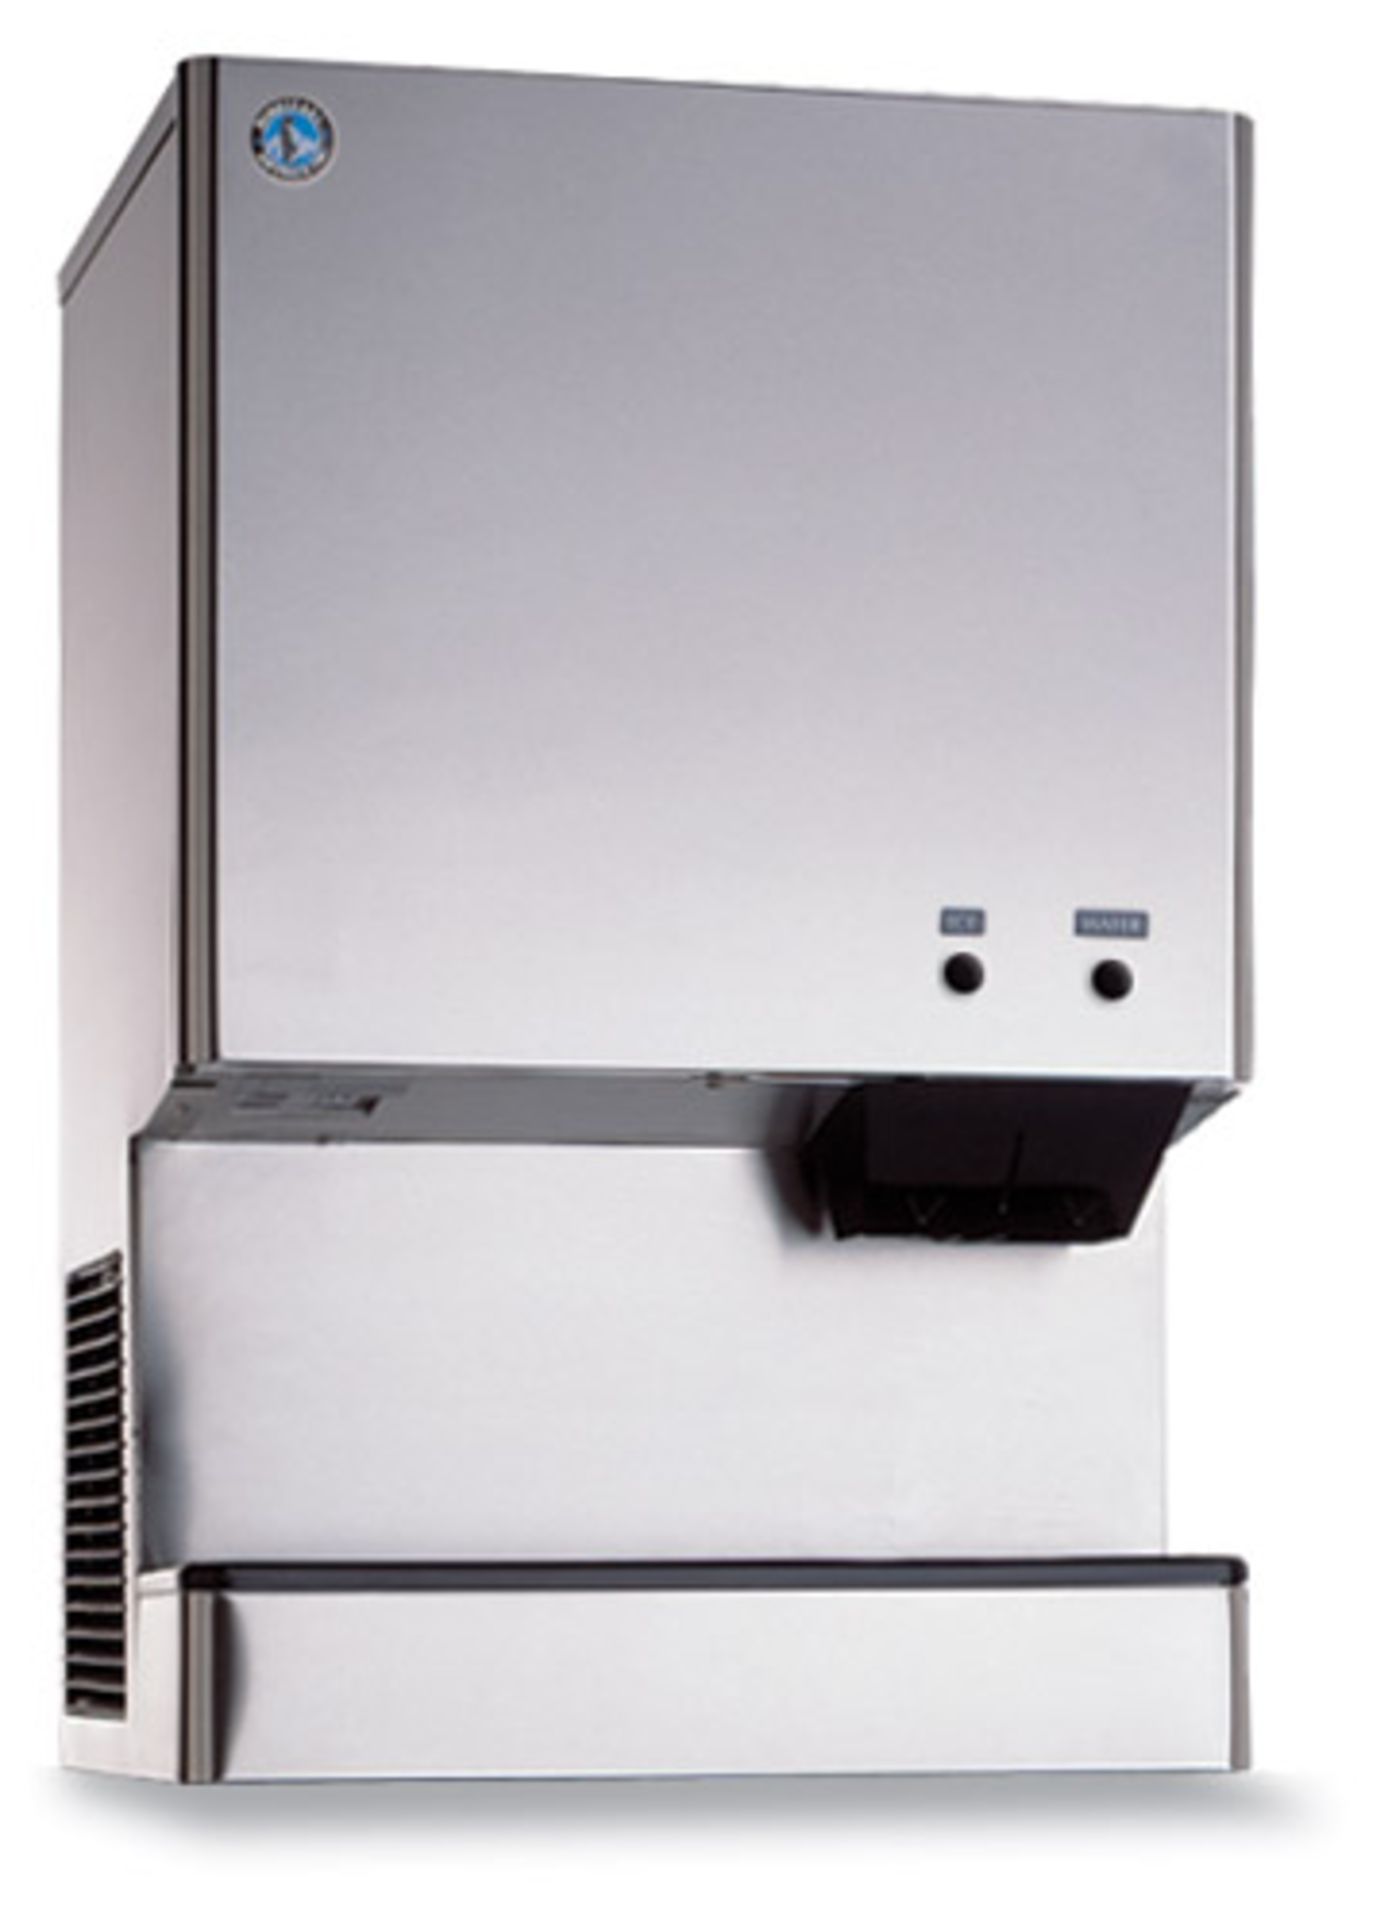 DCM-230HE-UK ice dispenser